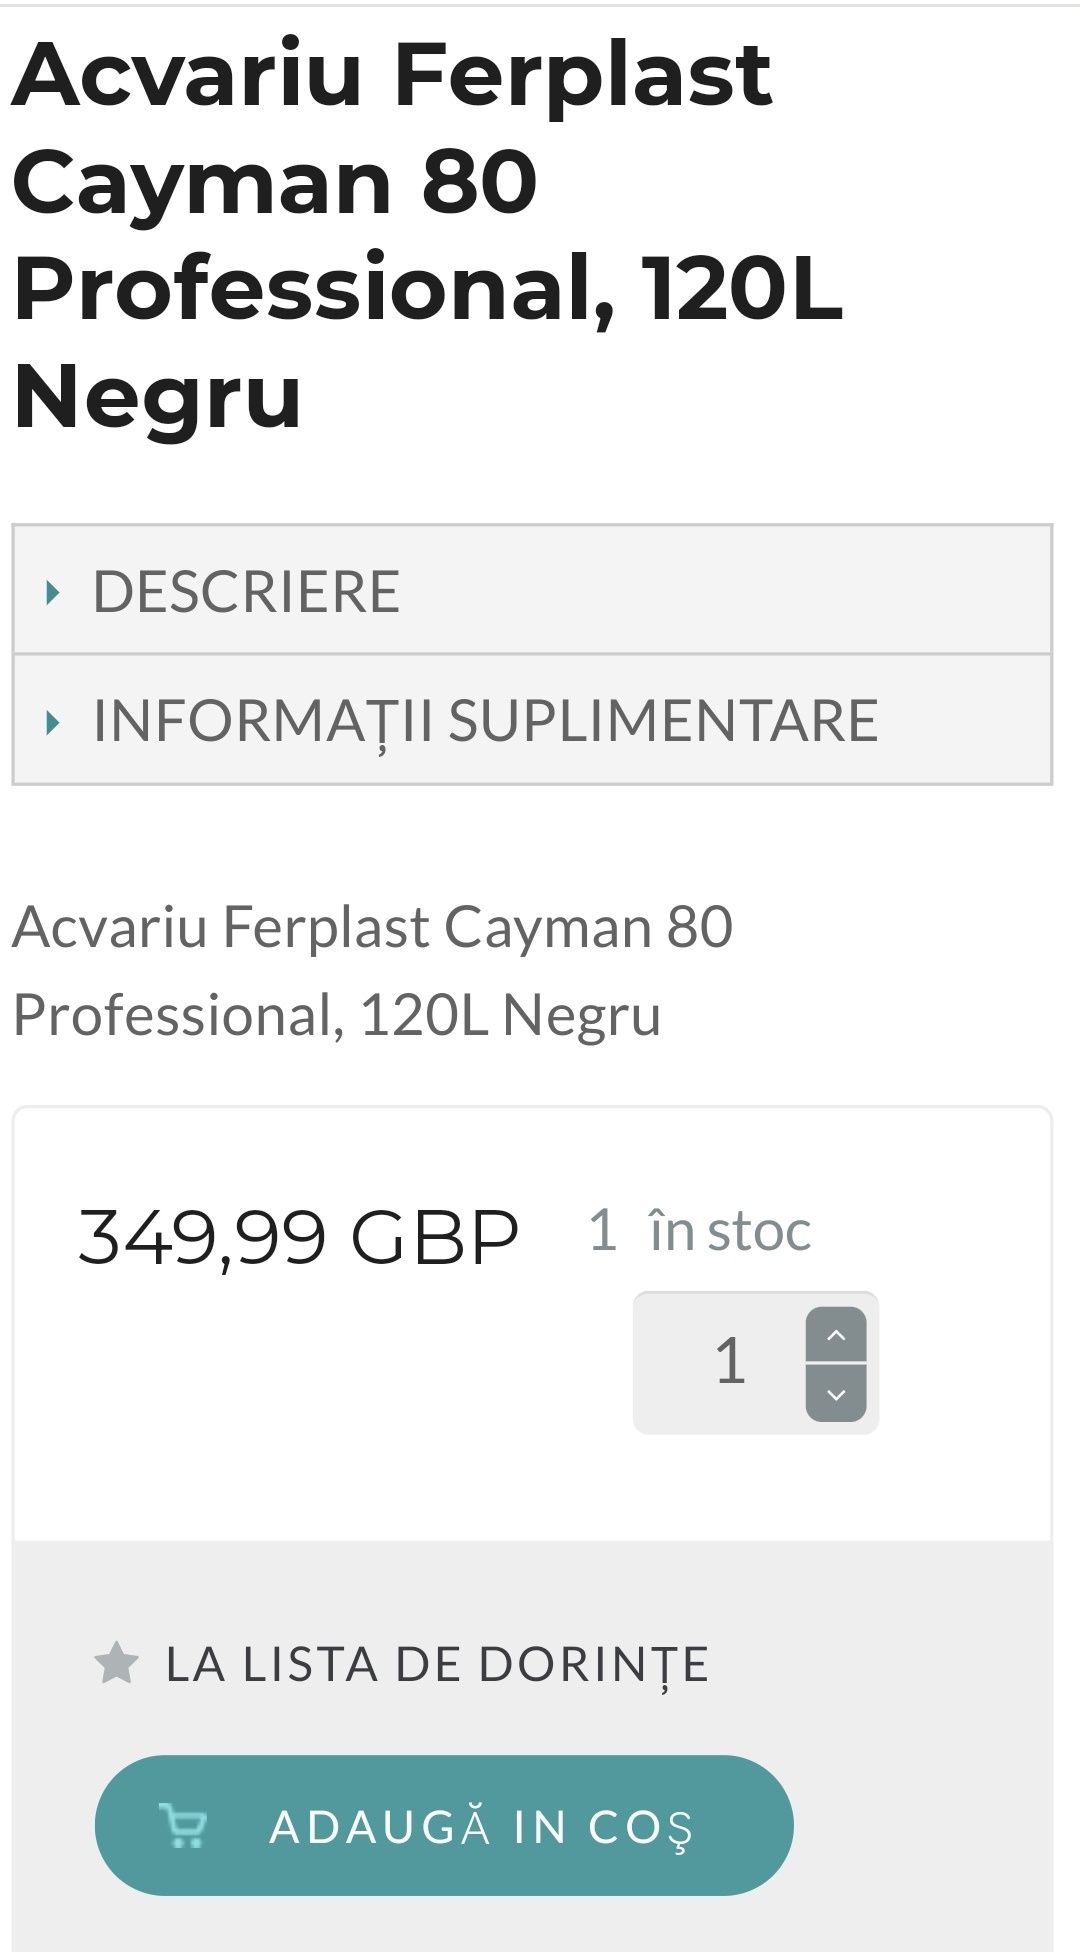 Kit Acvariu complect de la Cayman Ferplast Italy